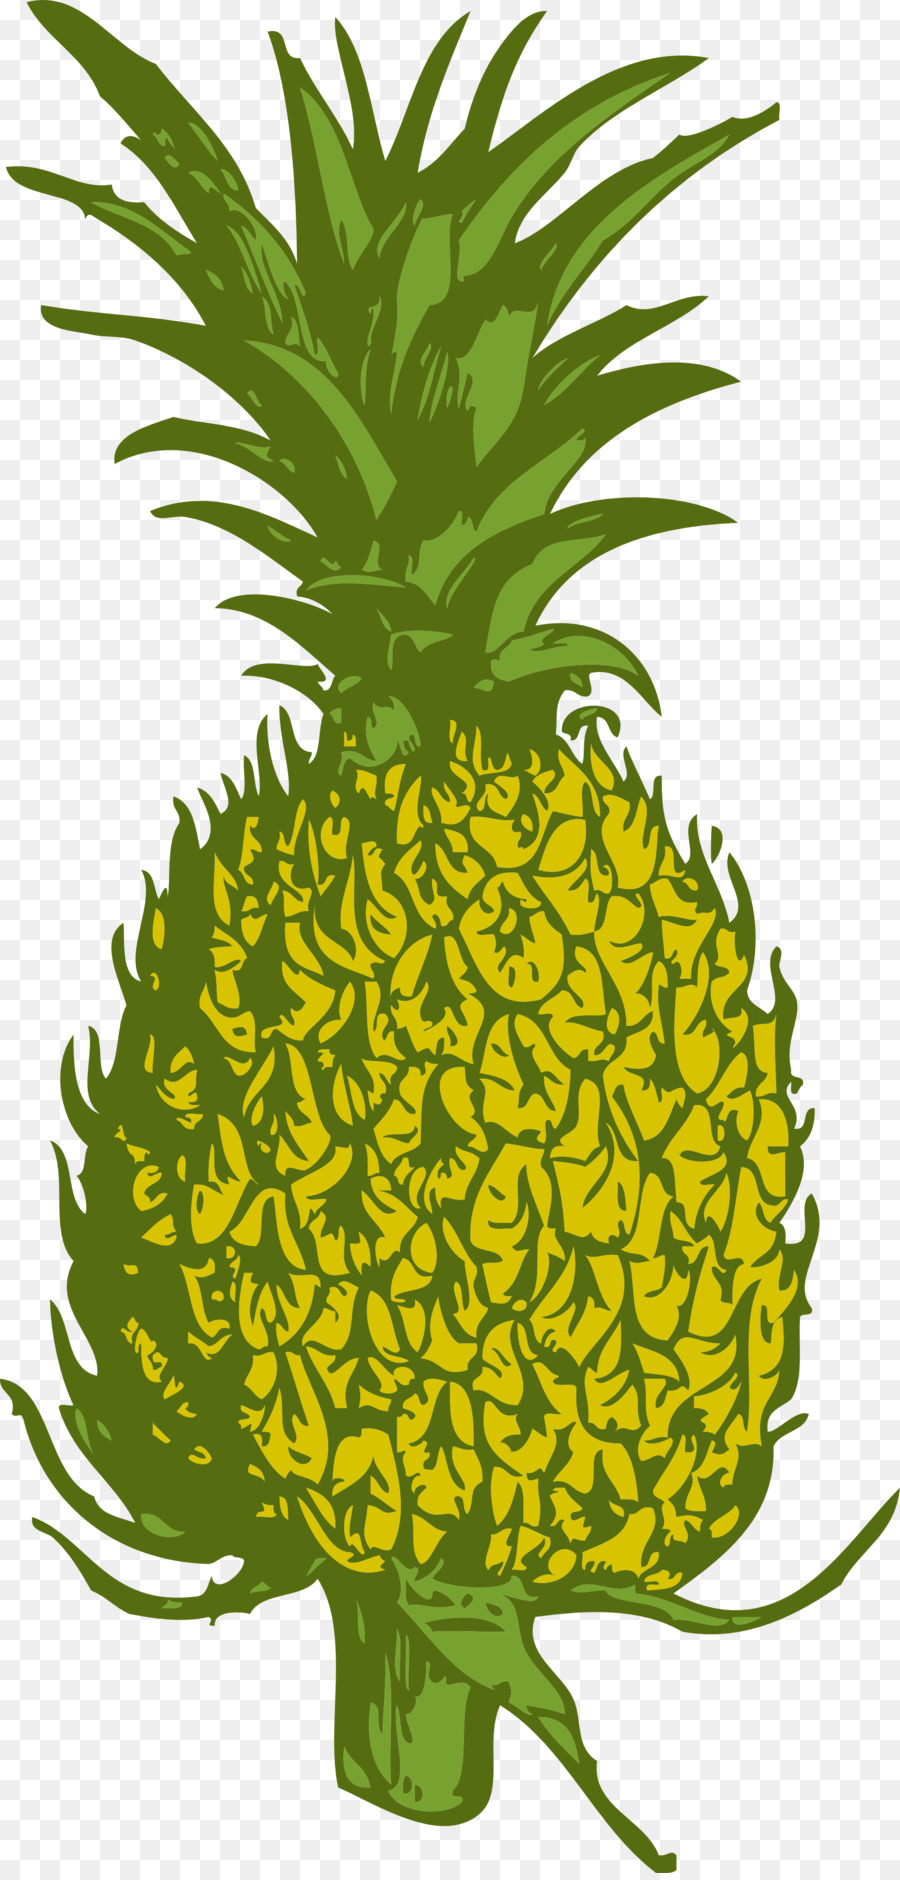 Pineapple Cartoon